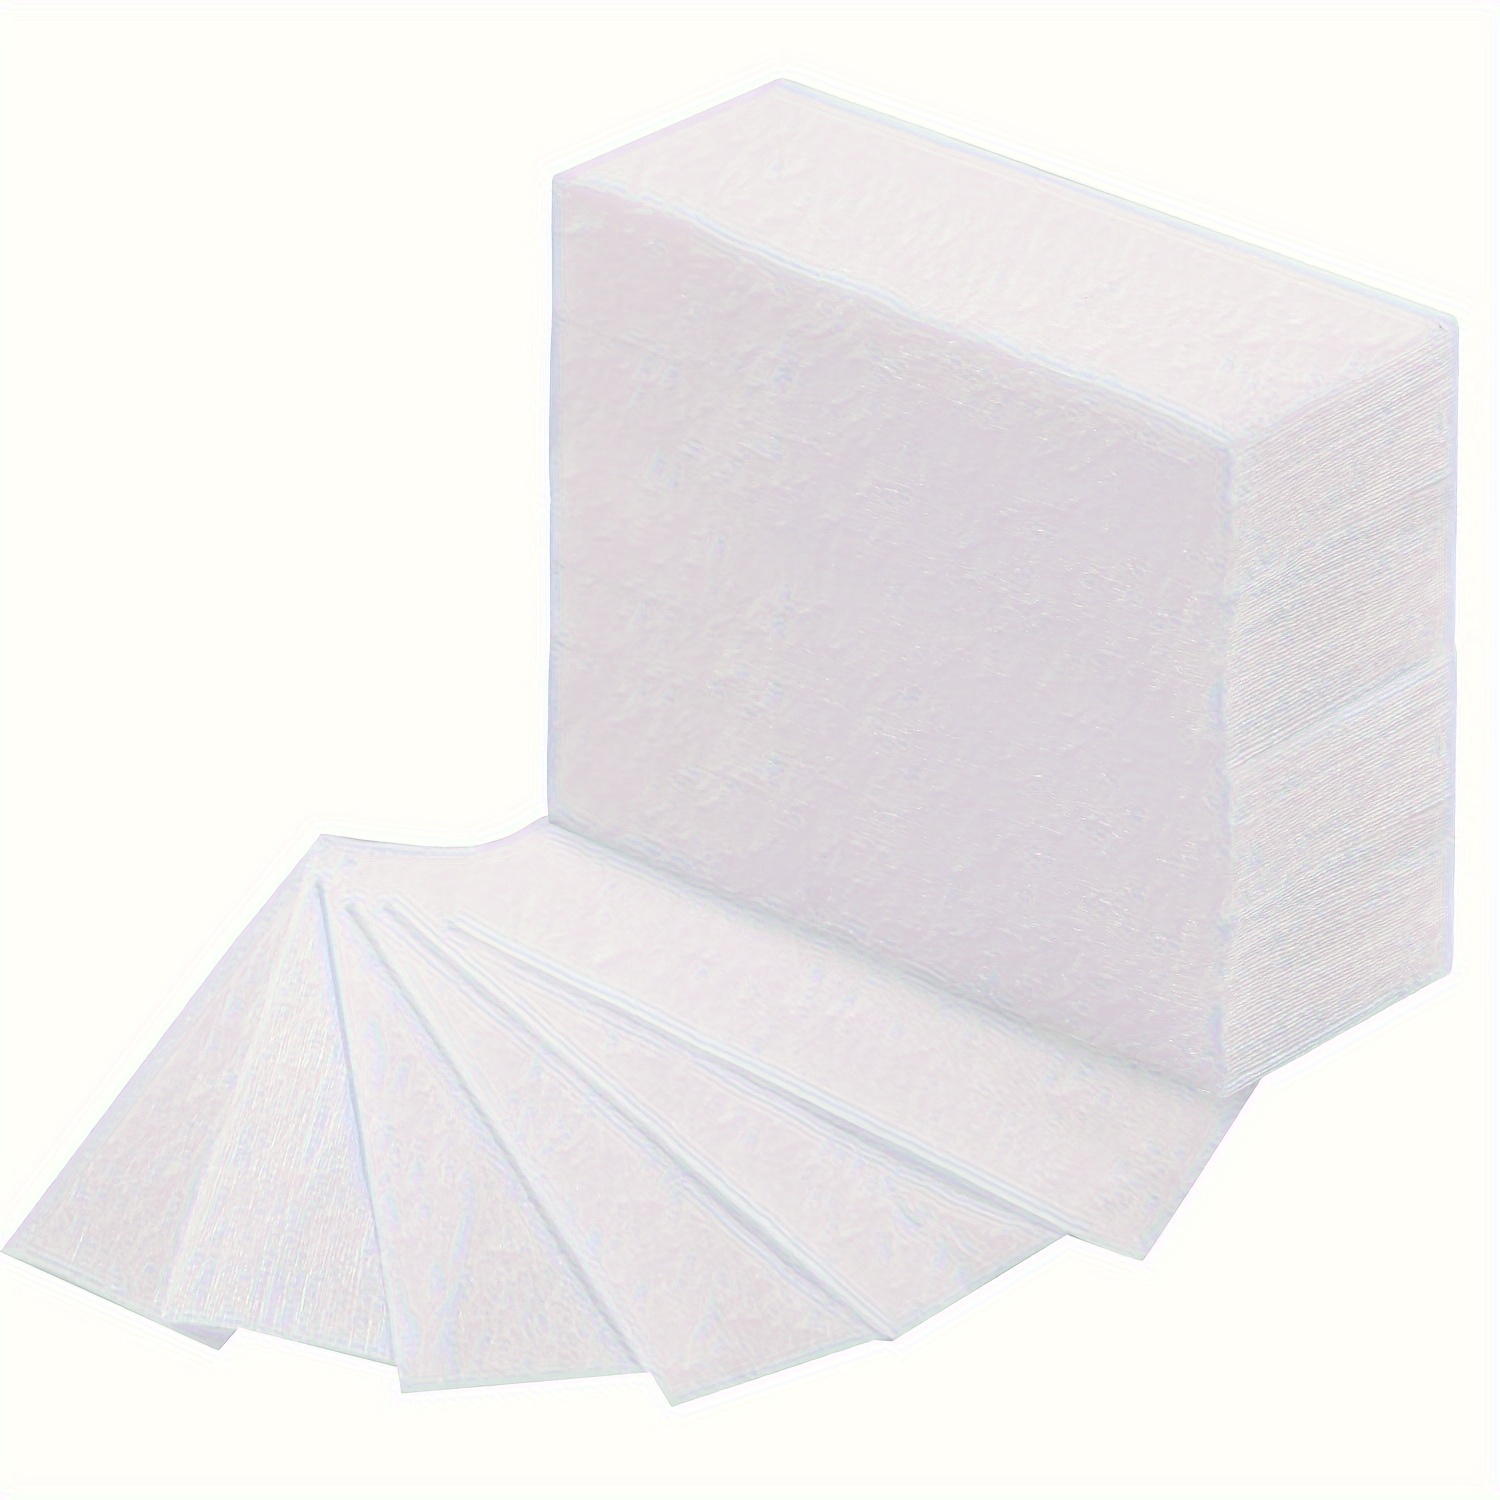 

100 Pcs Non Woven Wax Strips Facial And Body Hair Removal Waxing Strips Epilating Wax Strip Paper, White Depilatory Paper